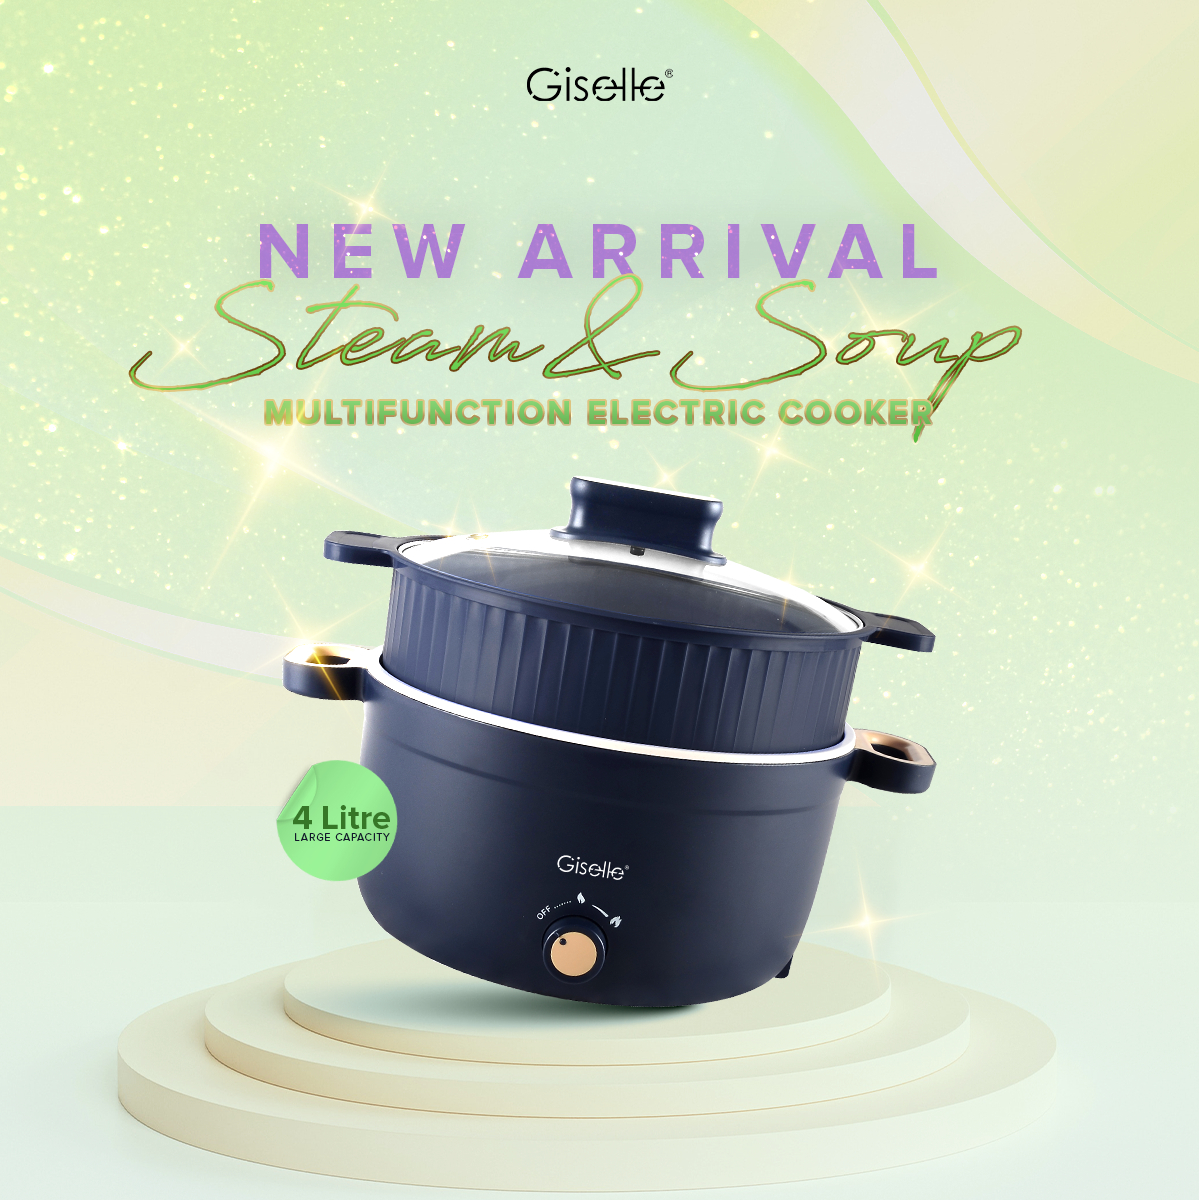 Giselle Mini Rice Cooker 1.2L with Non-stick Pot and Steamer 200W (KEA0371)